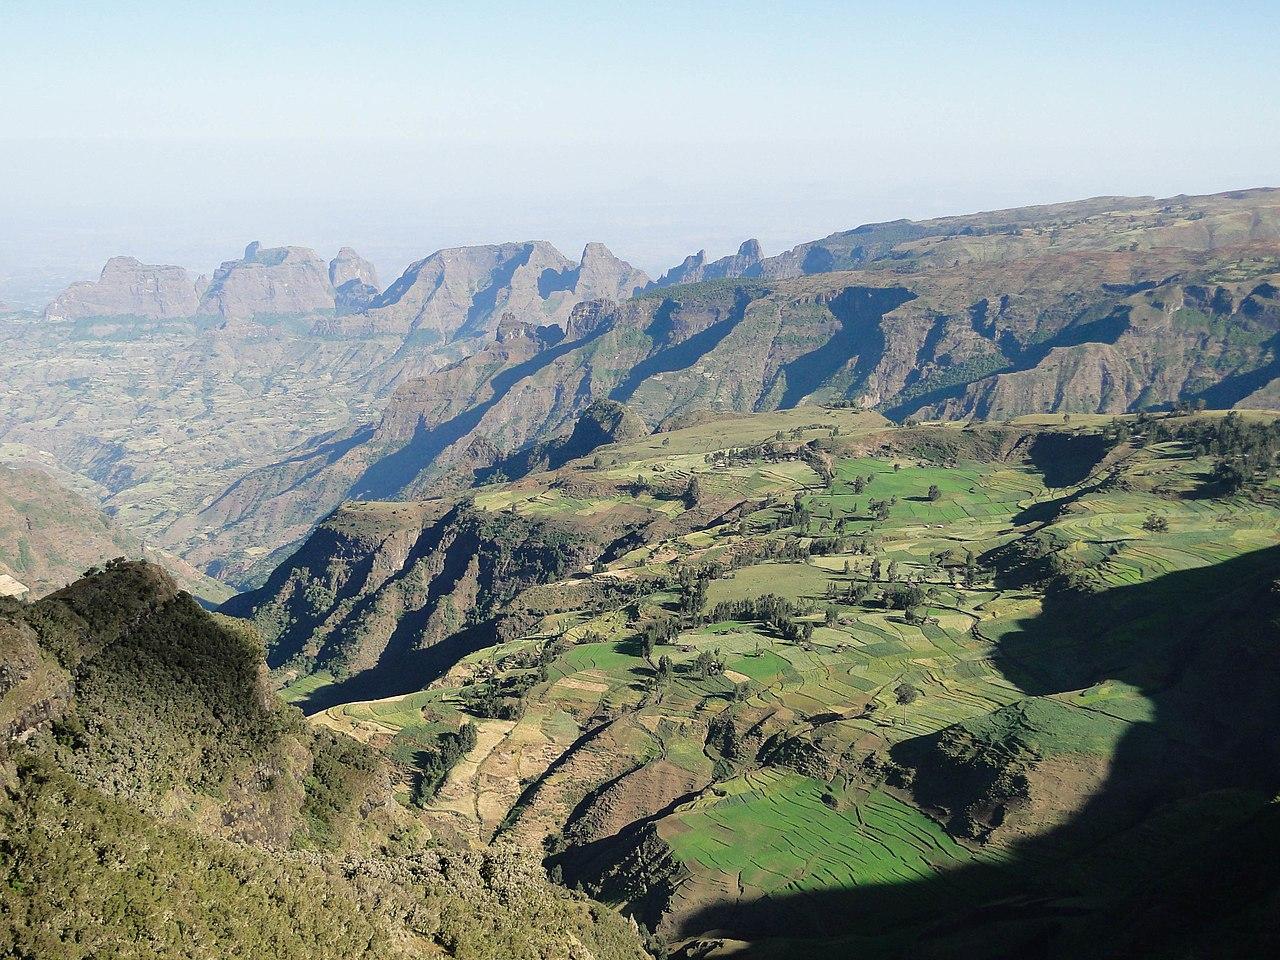 Debarq, Ethiopia